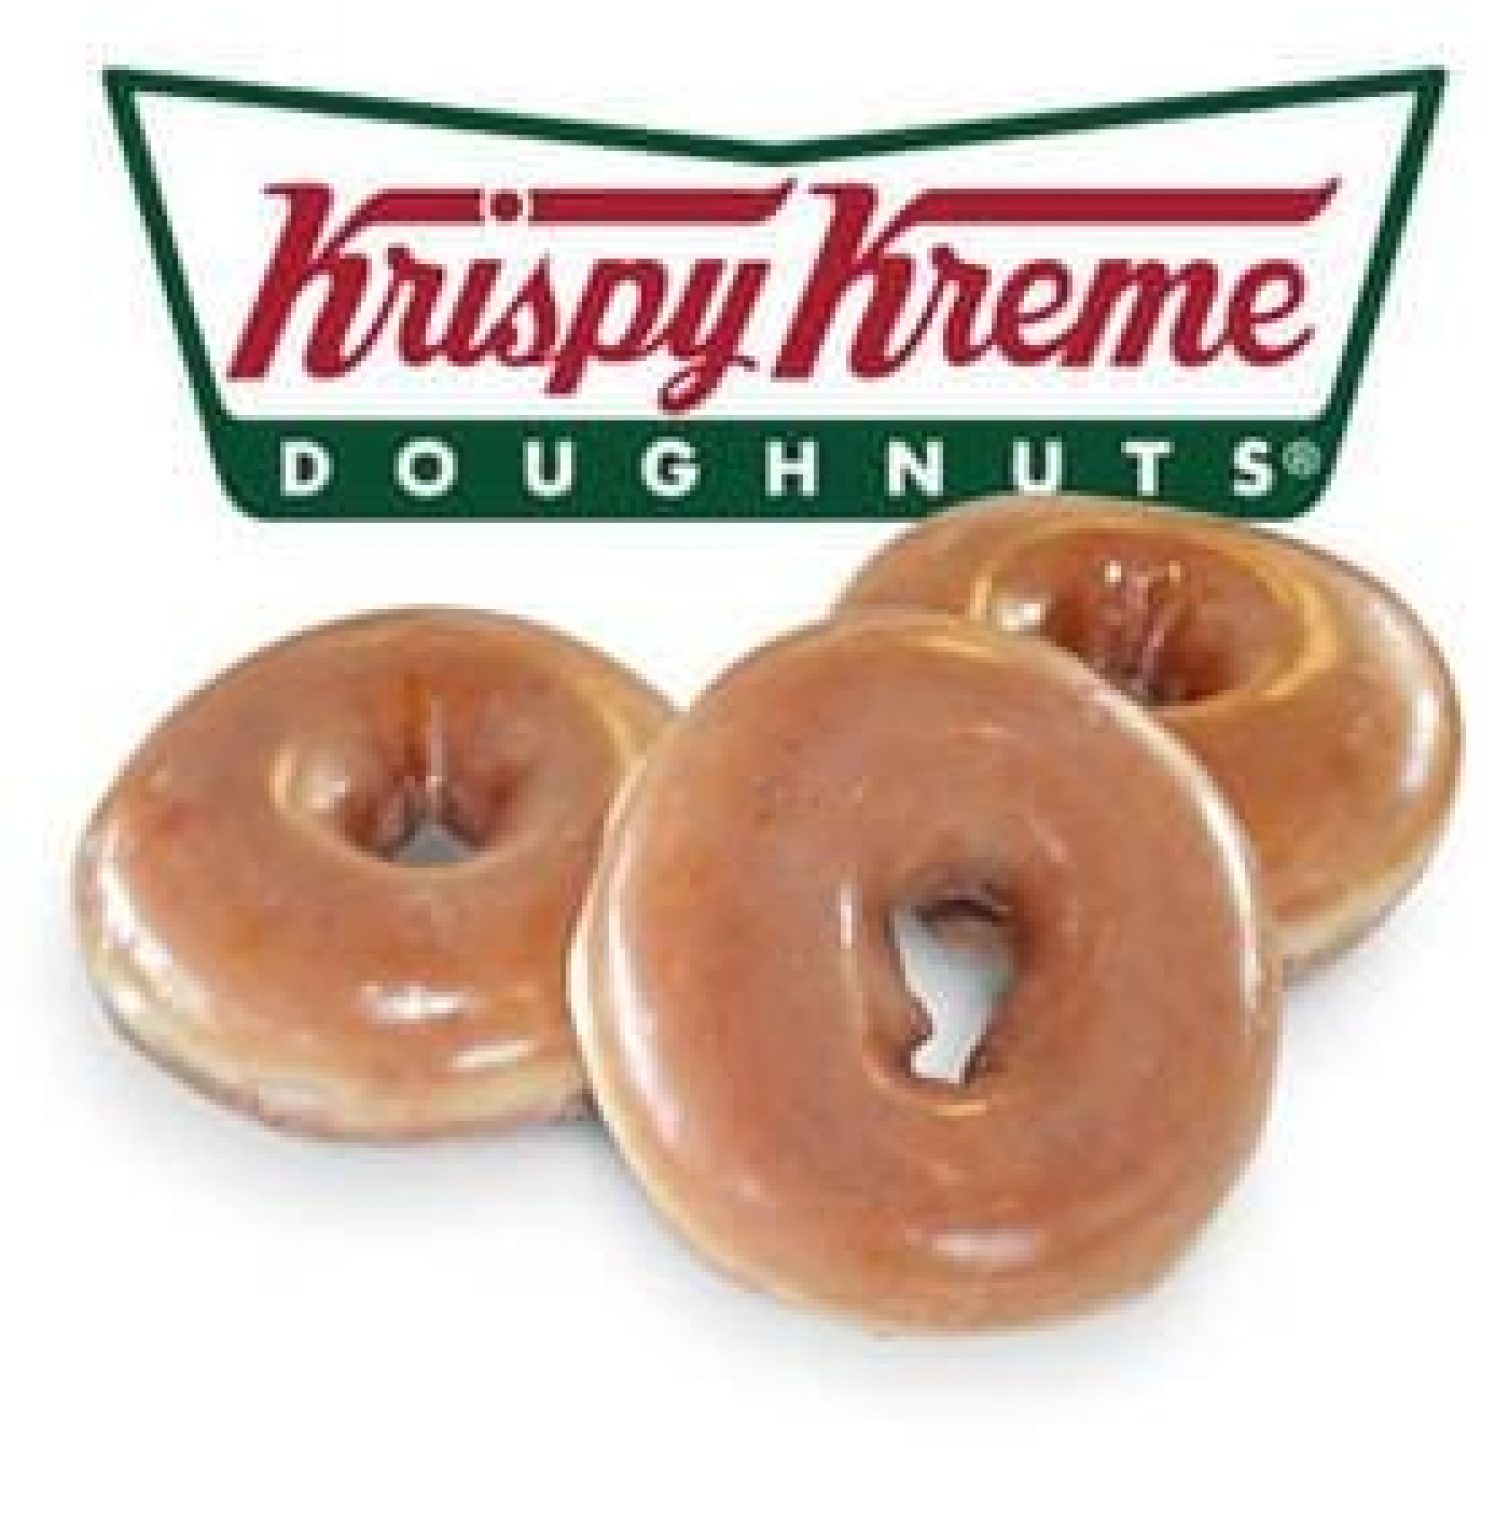 FREE Doughnut From Krispy Kreme!